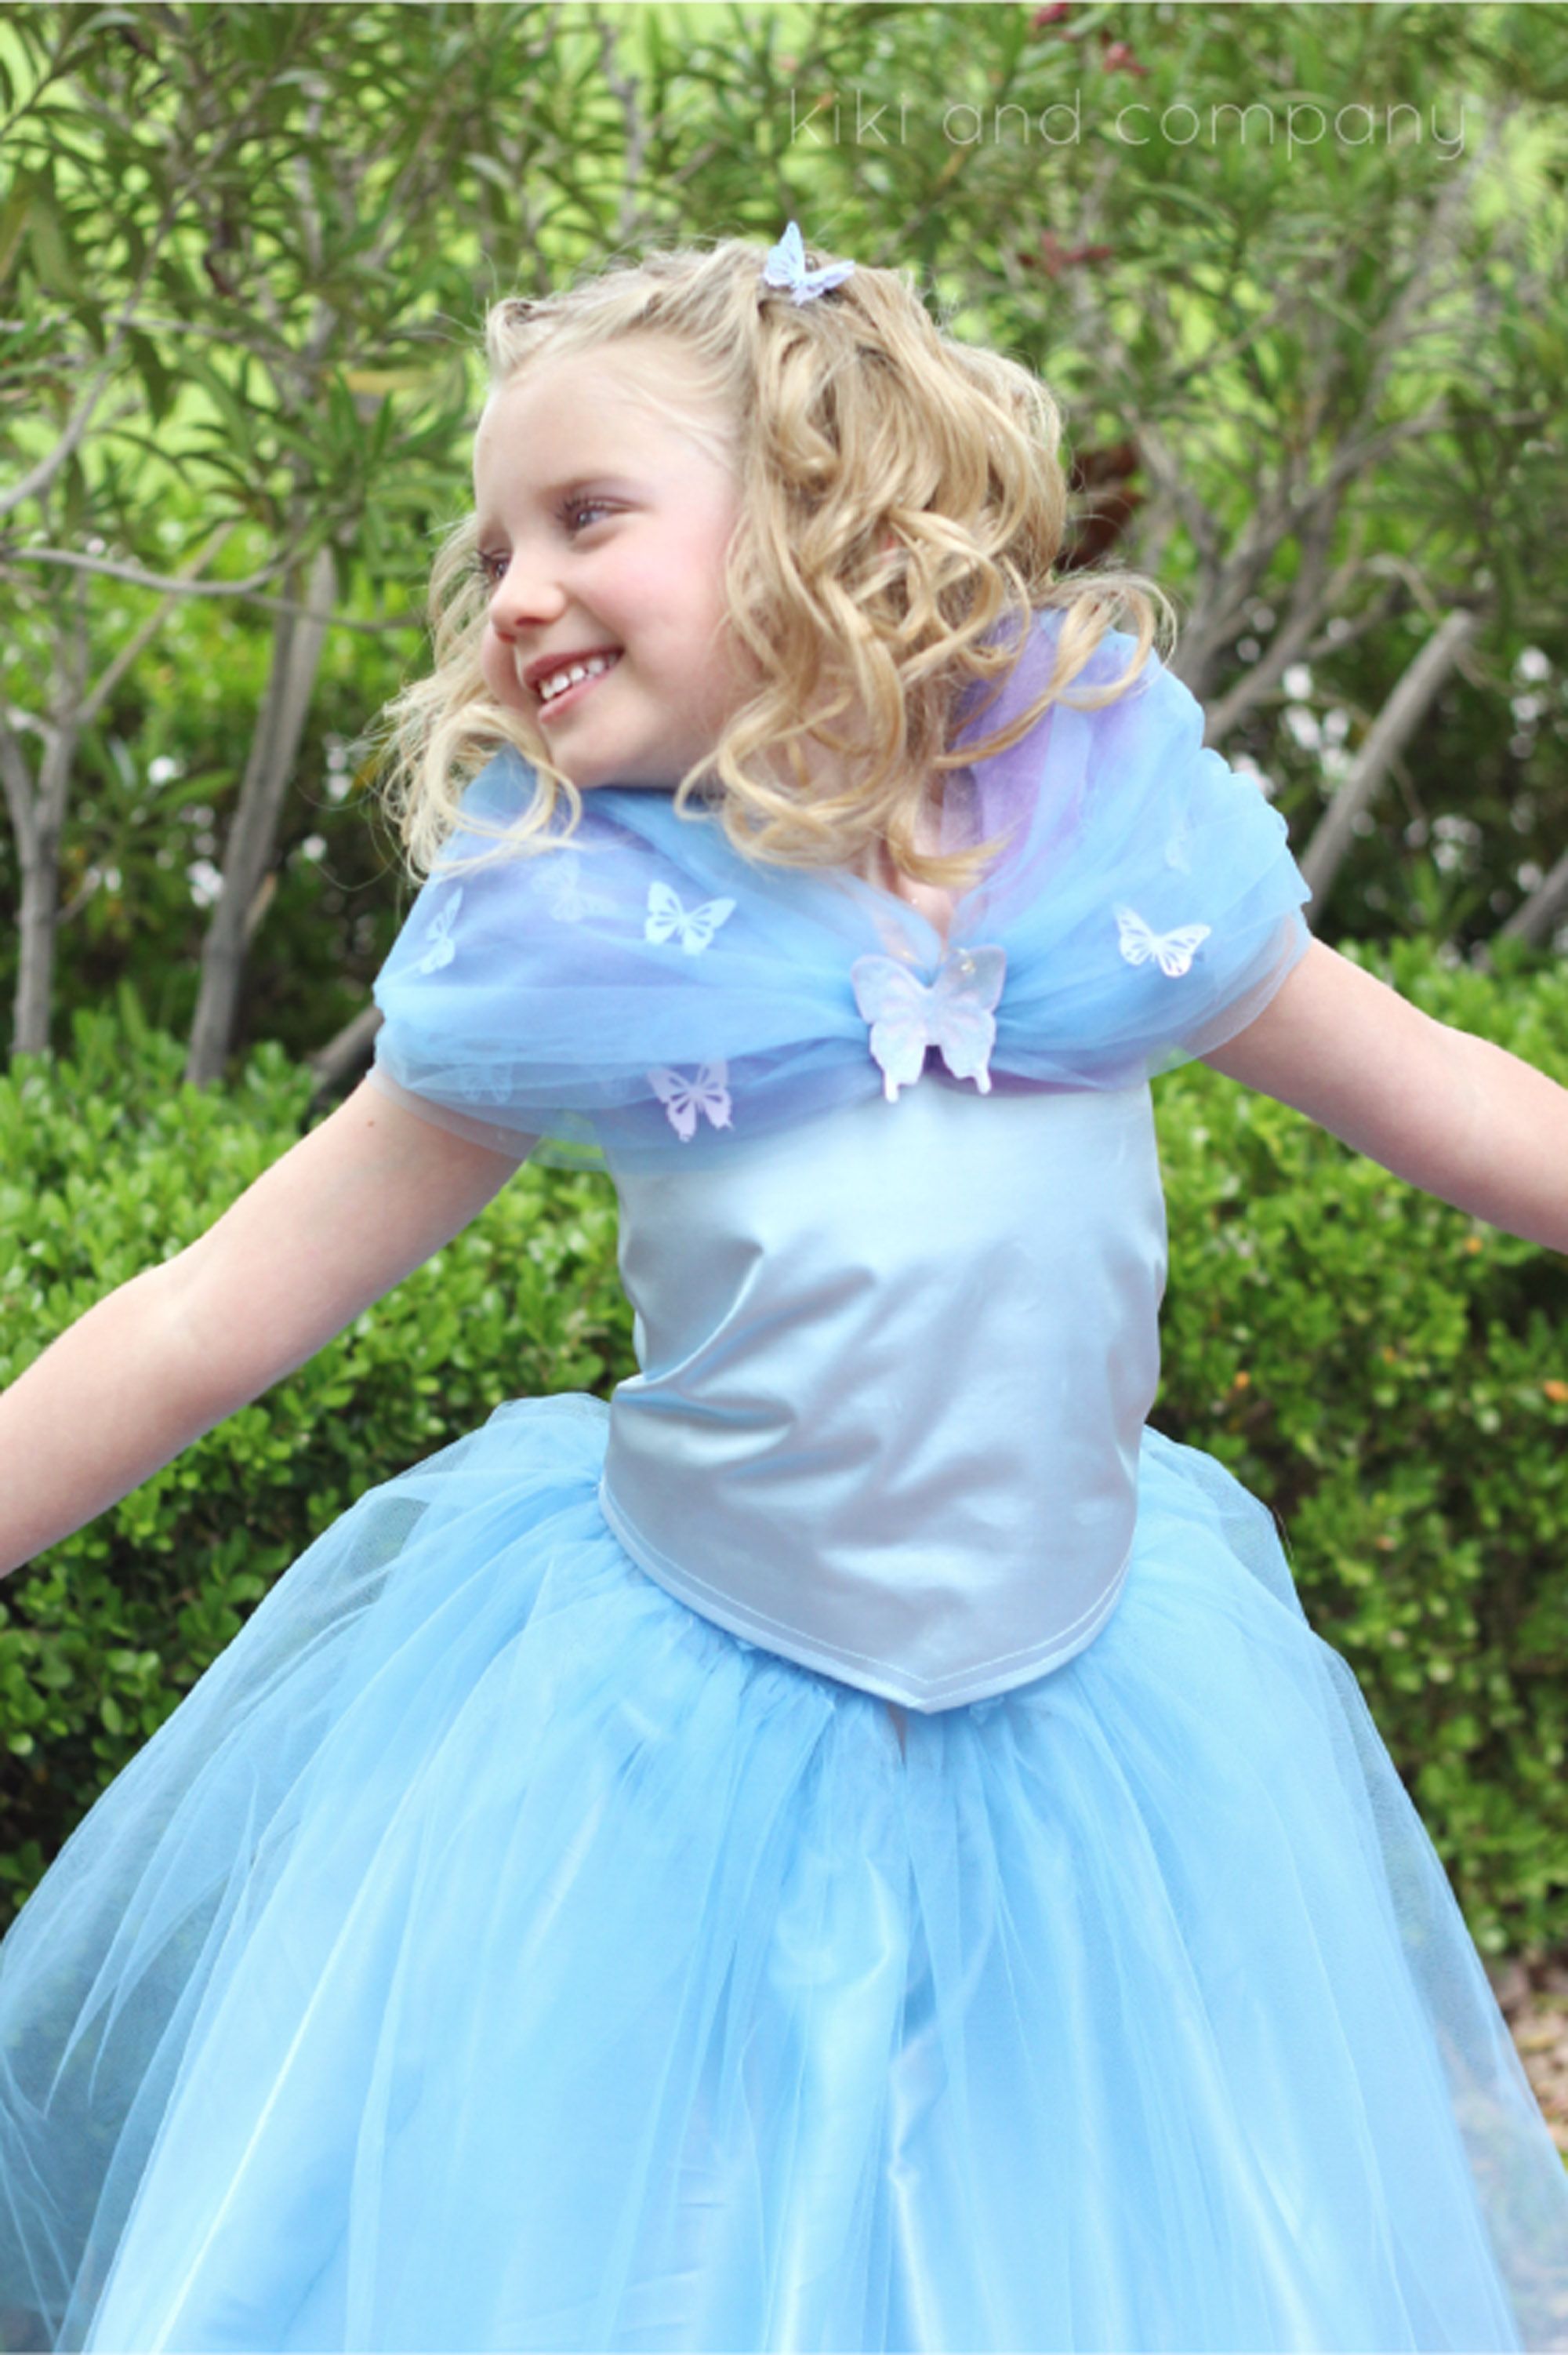 Disney Princess Fancy Dress